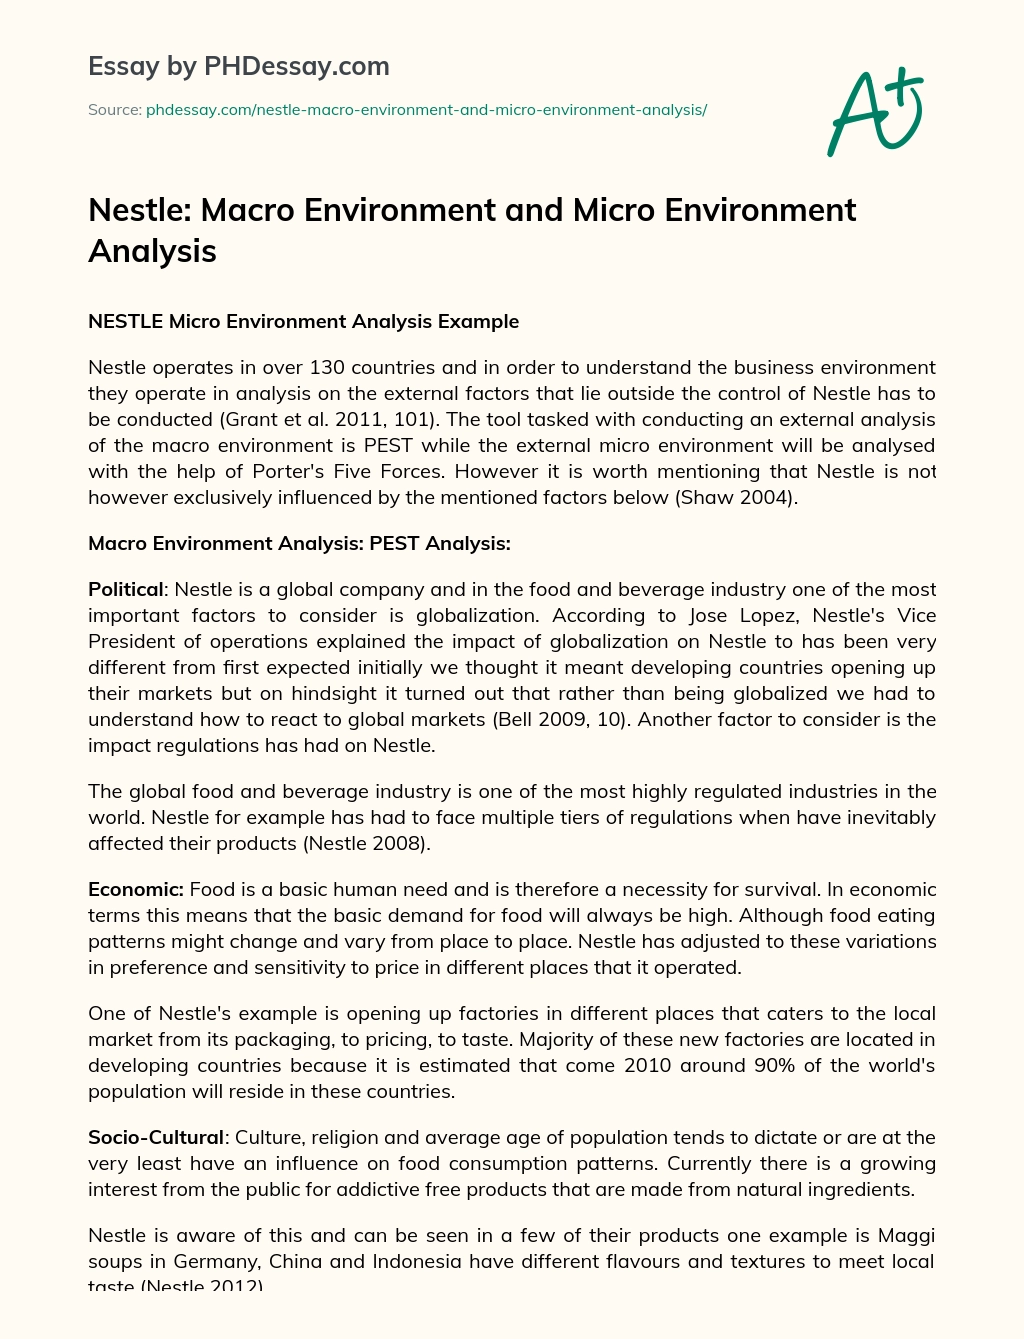 Nestle: Macro Environment and Micro Environment Analysis essay